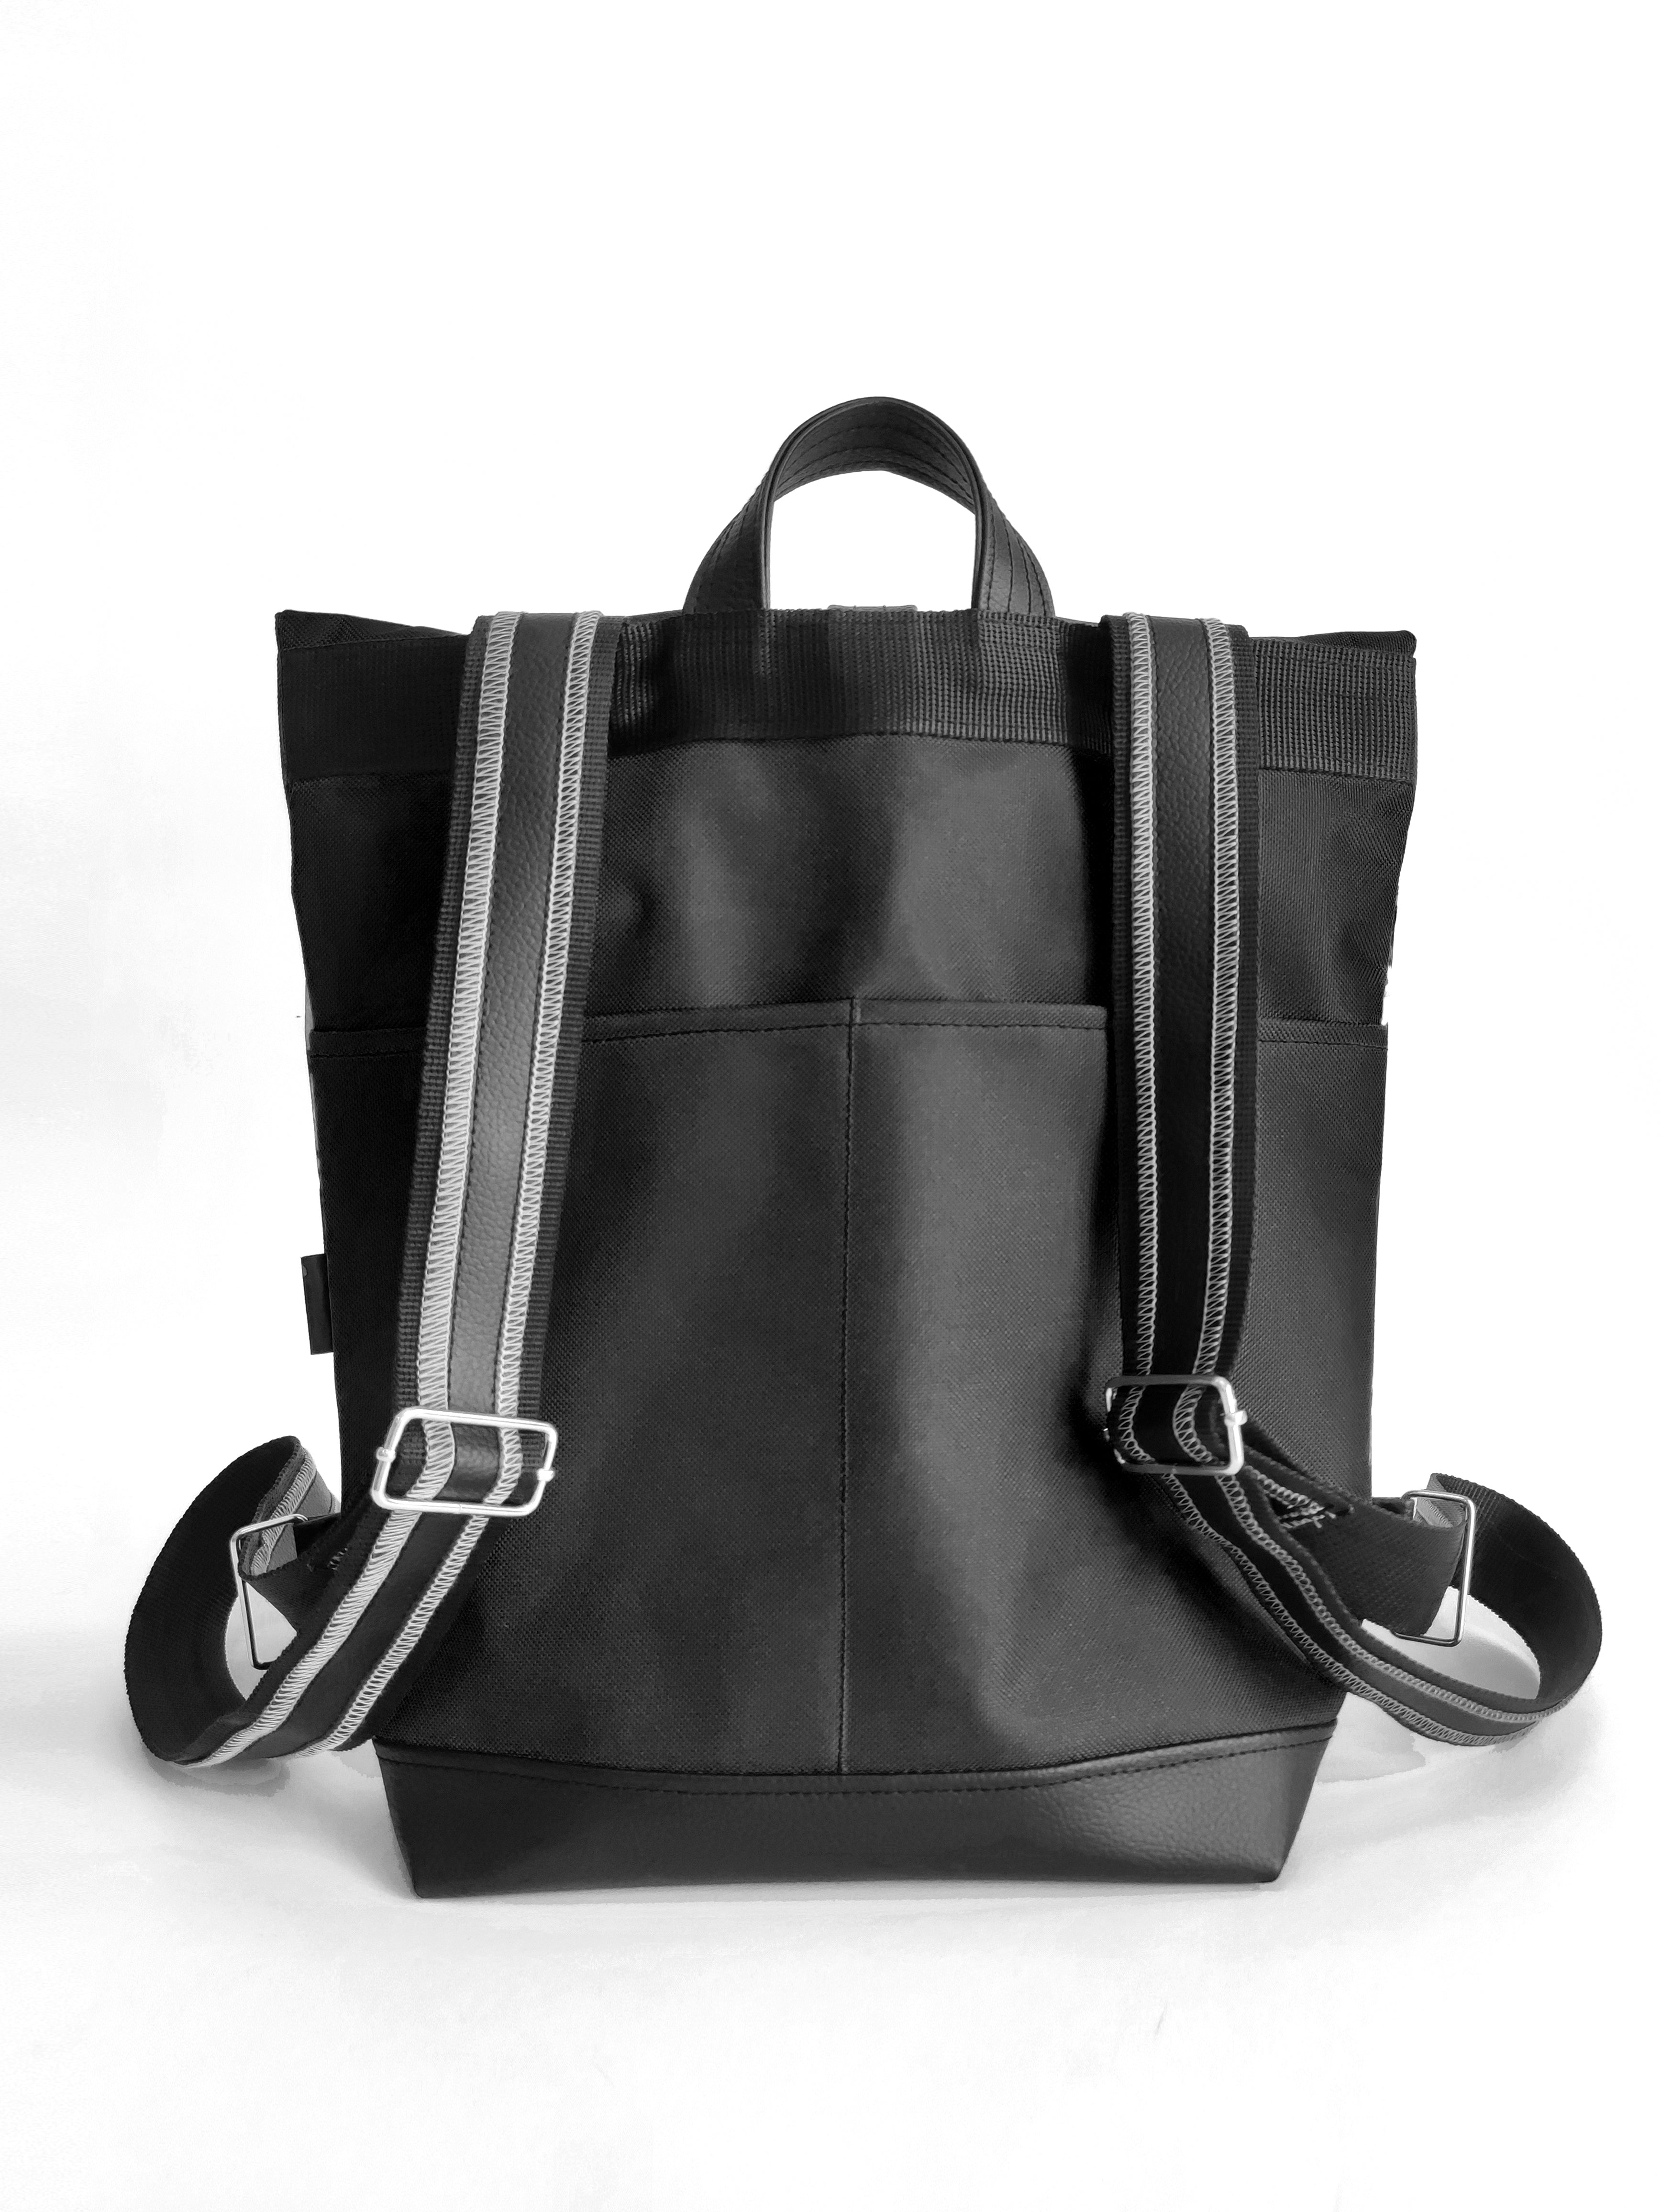 Bardo roll backpack - Summer night - Premium Bardo backpack from BARDO ART WORKS - Just lvabstract, art, backpack, black, dragon, gift, handemade, roll, tablet, urban style, vegan leather85.00! Shop now at BARDO ART WORKS